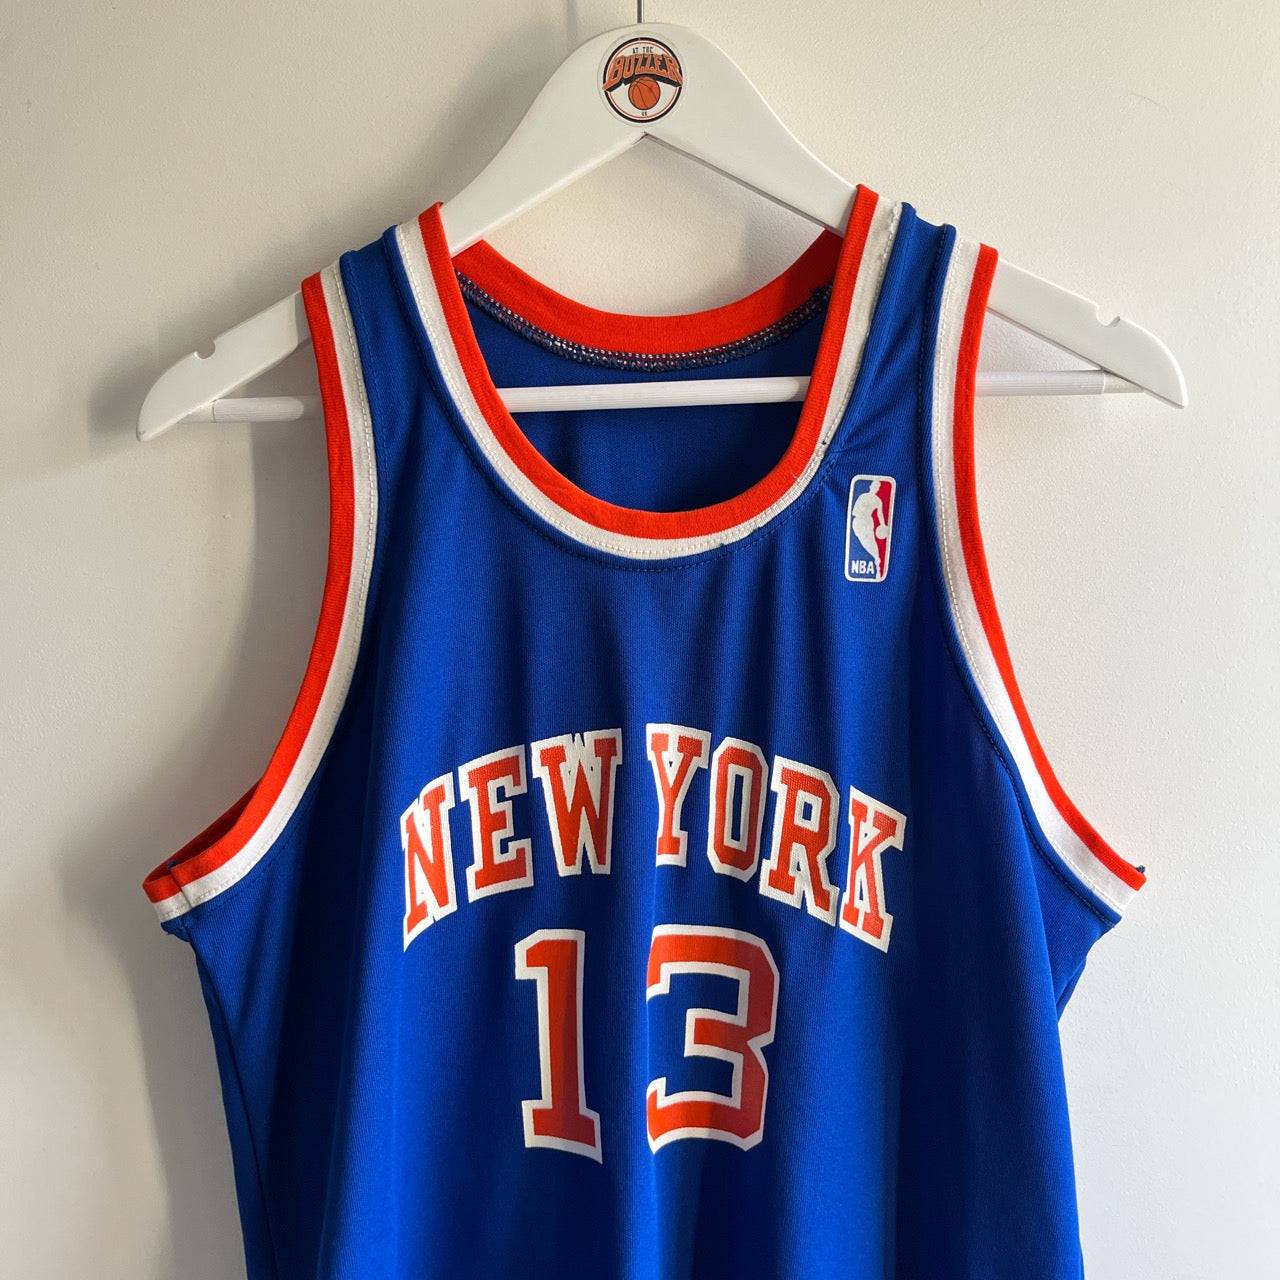 New York Knicks Mark Jackson jersey - McGregor Sand Knit (Large) - At the buzzer UK